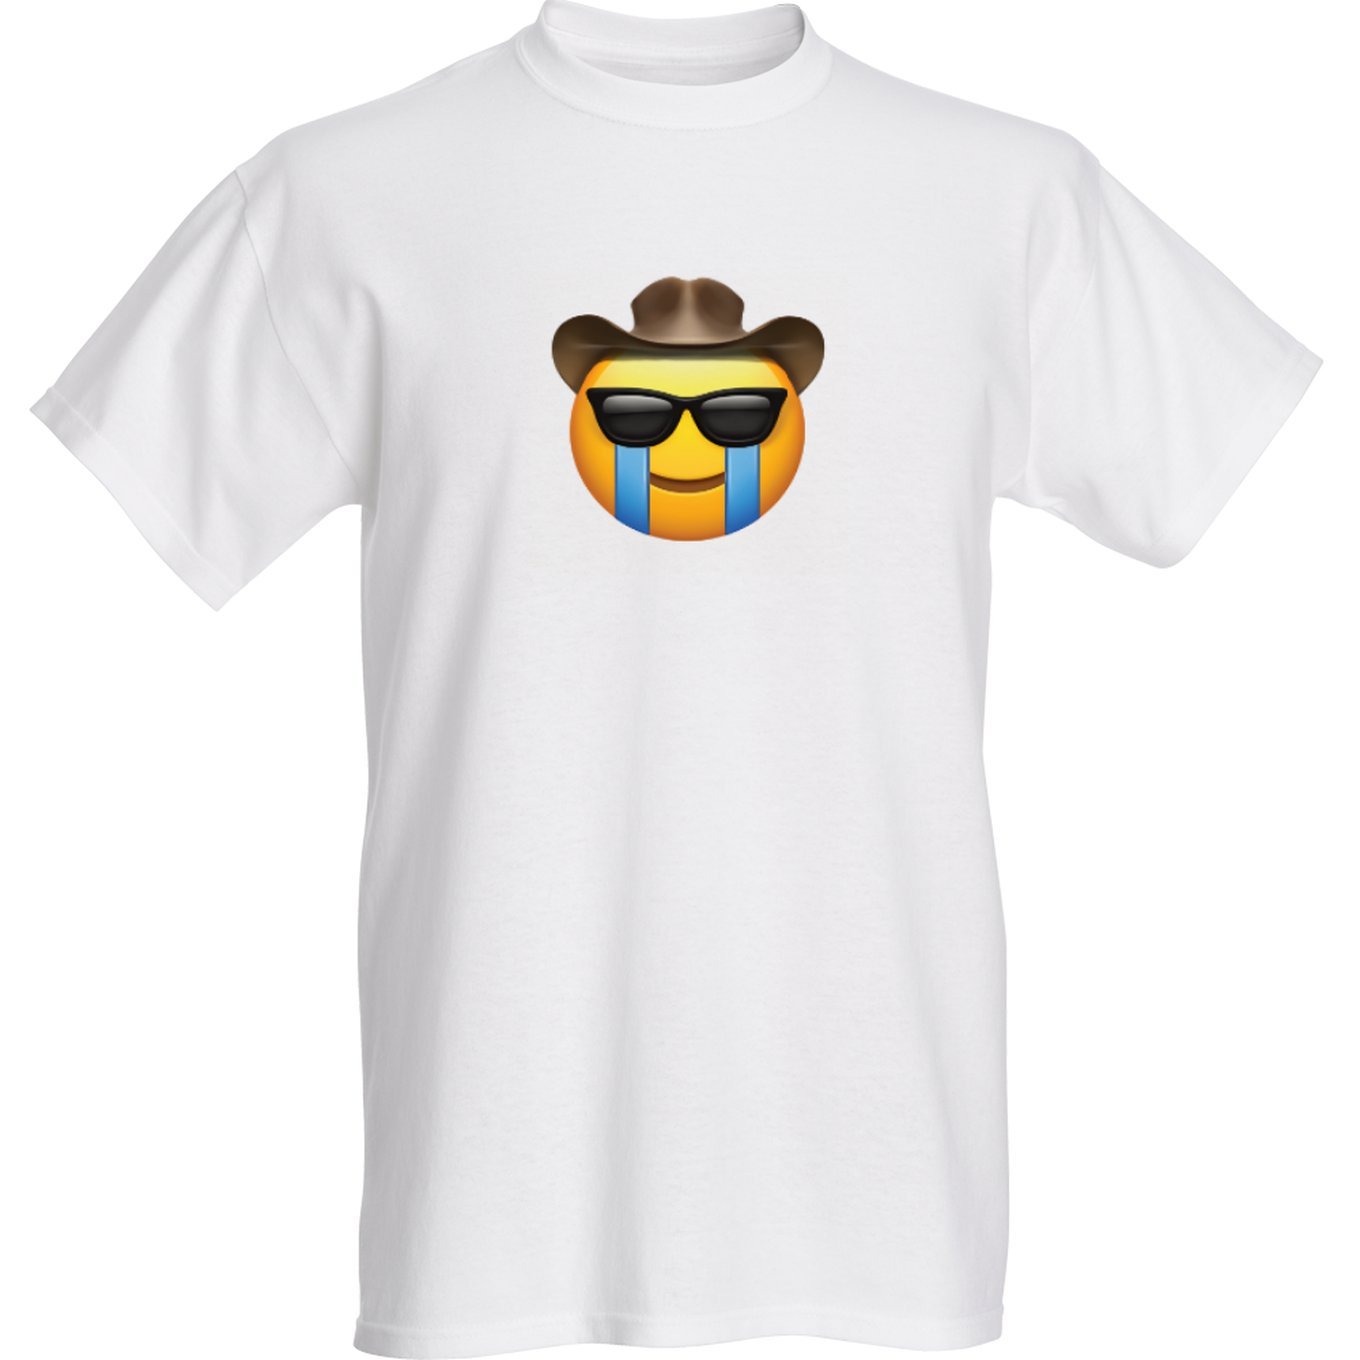 Cool Sad Cowboy T-Shirt (Full Frontal)